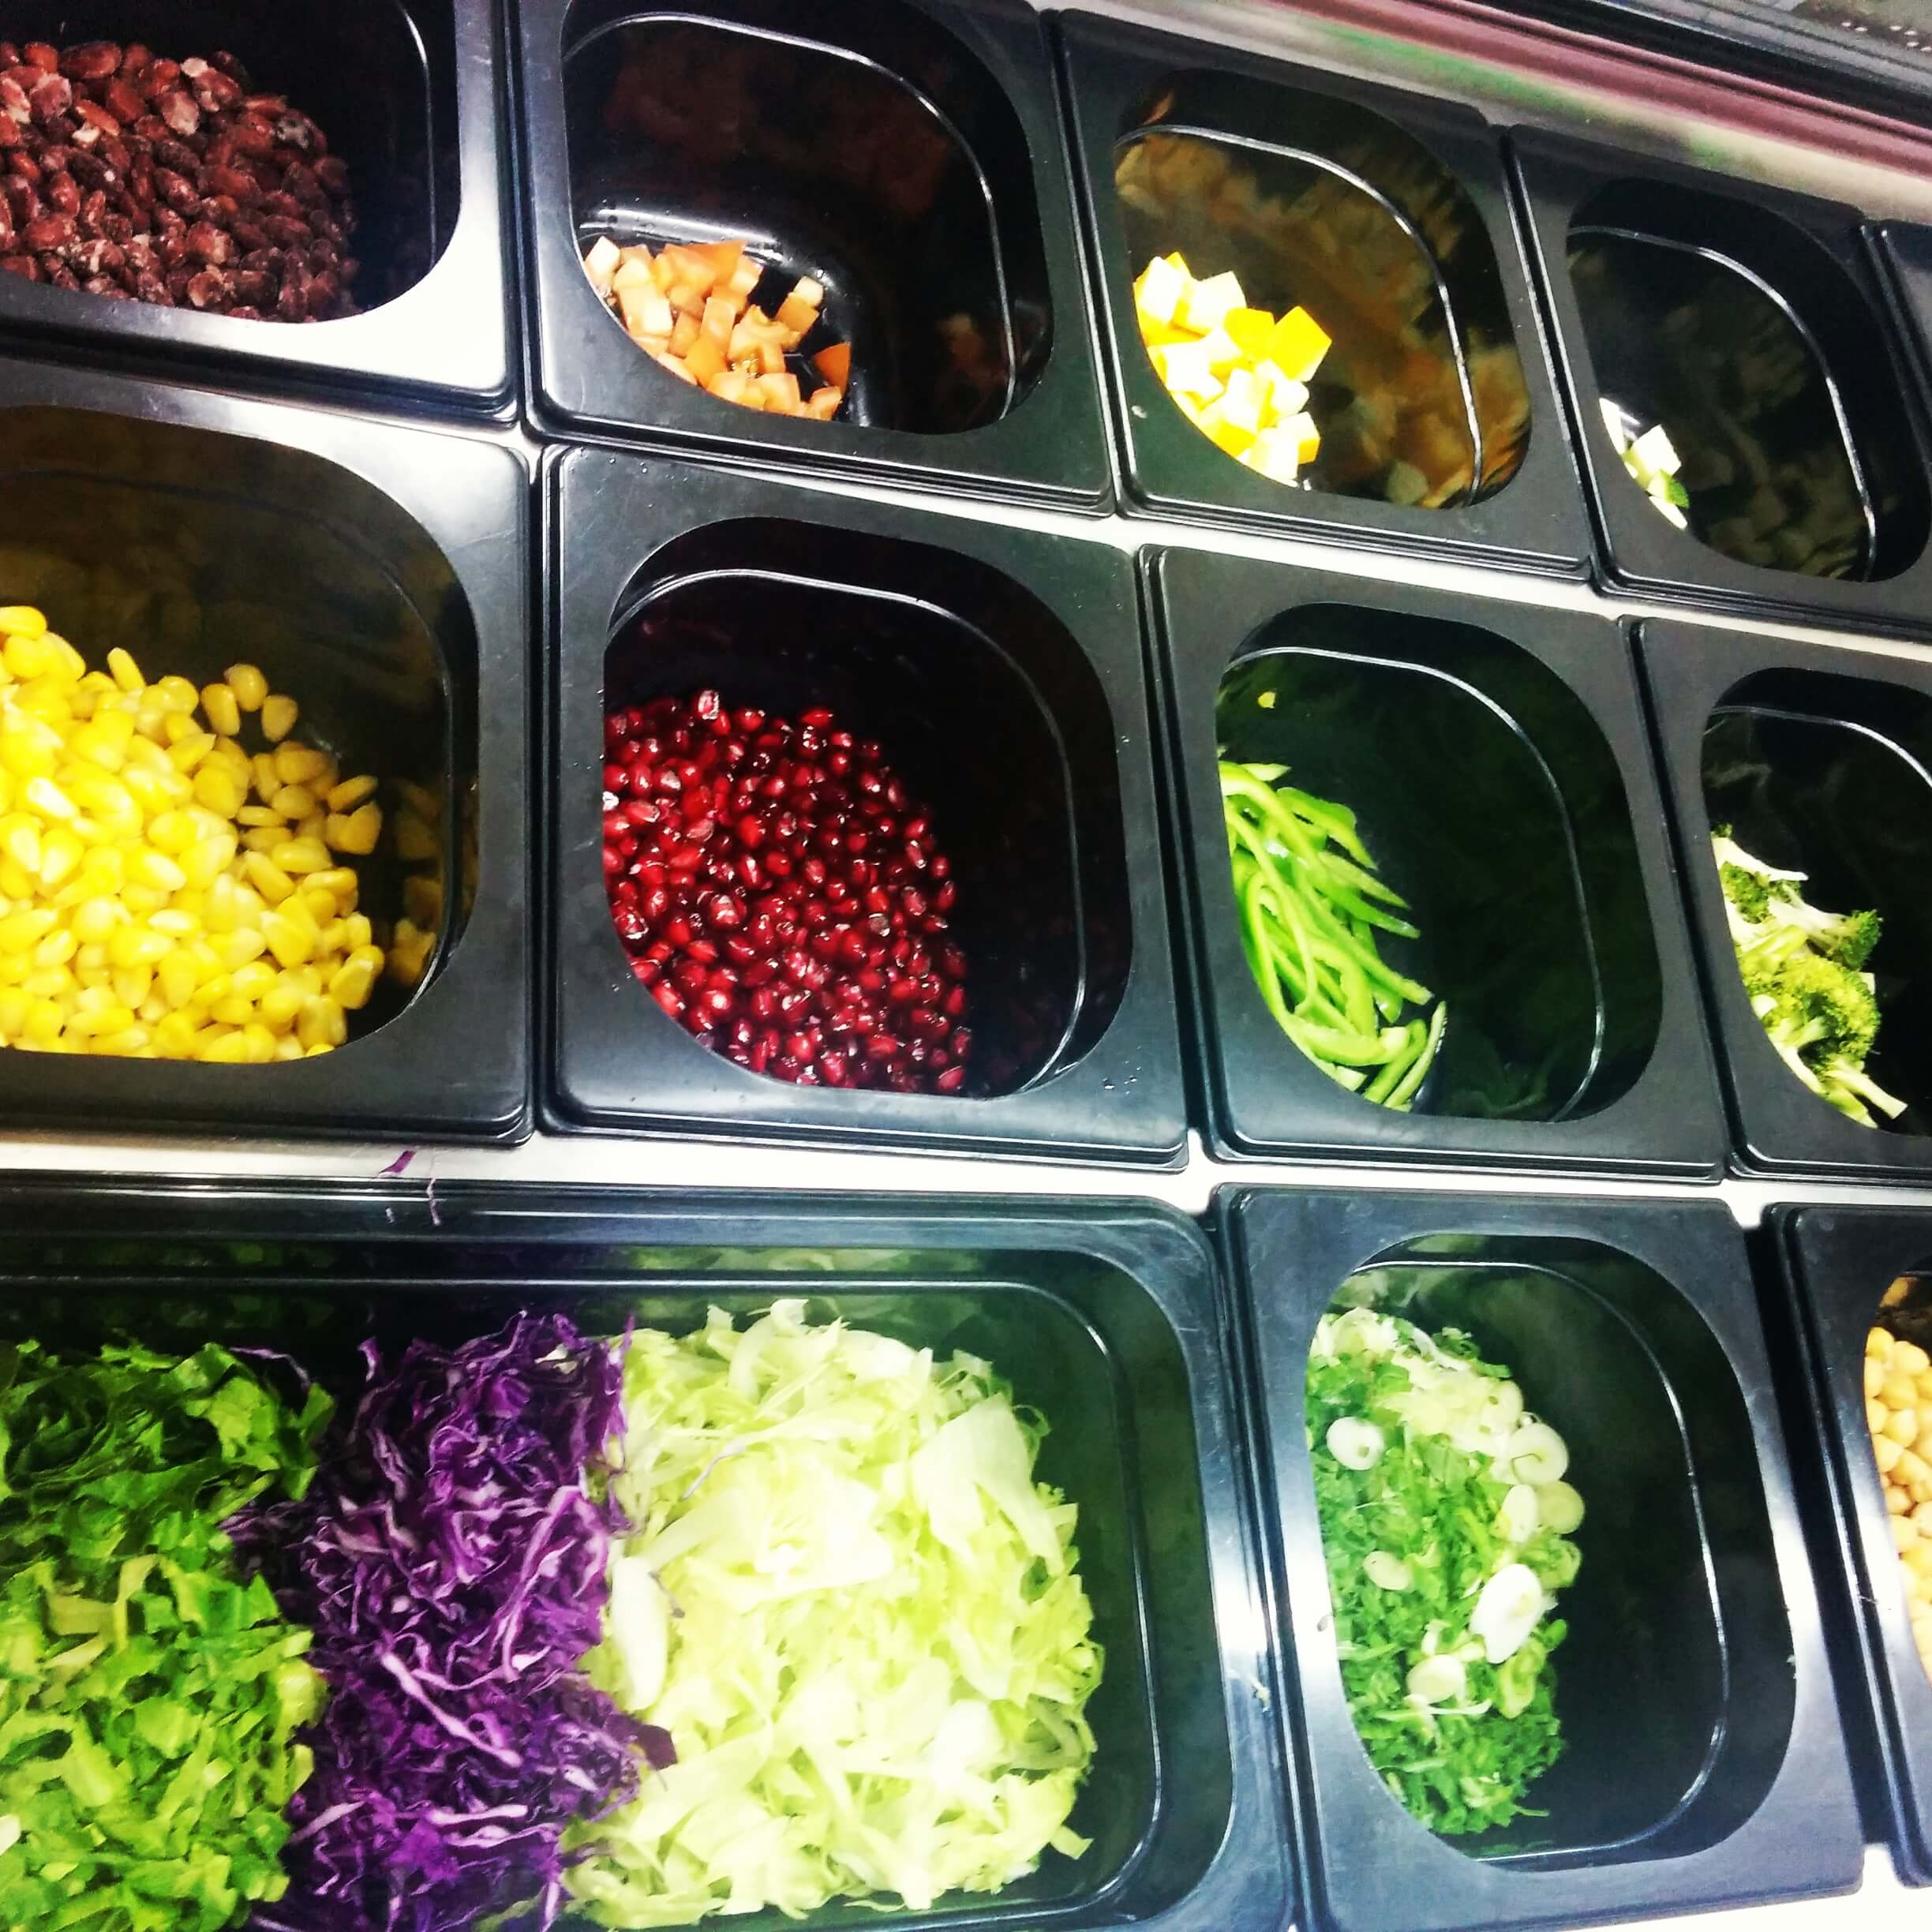 Salad bar - freshly chopped veggies